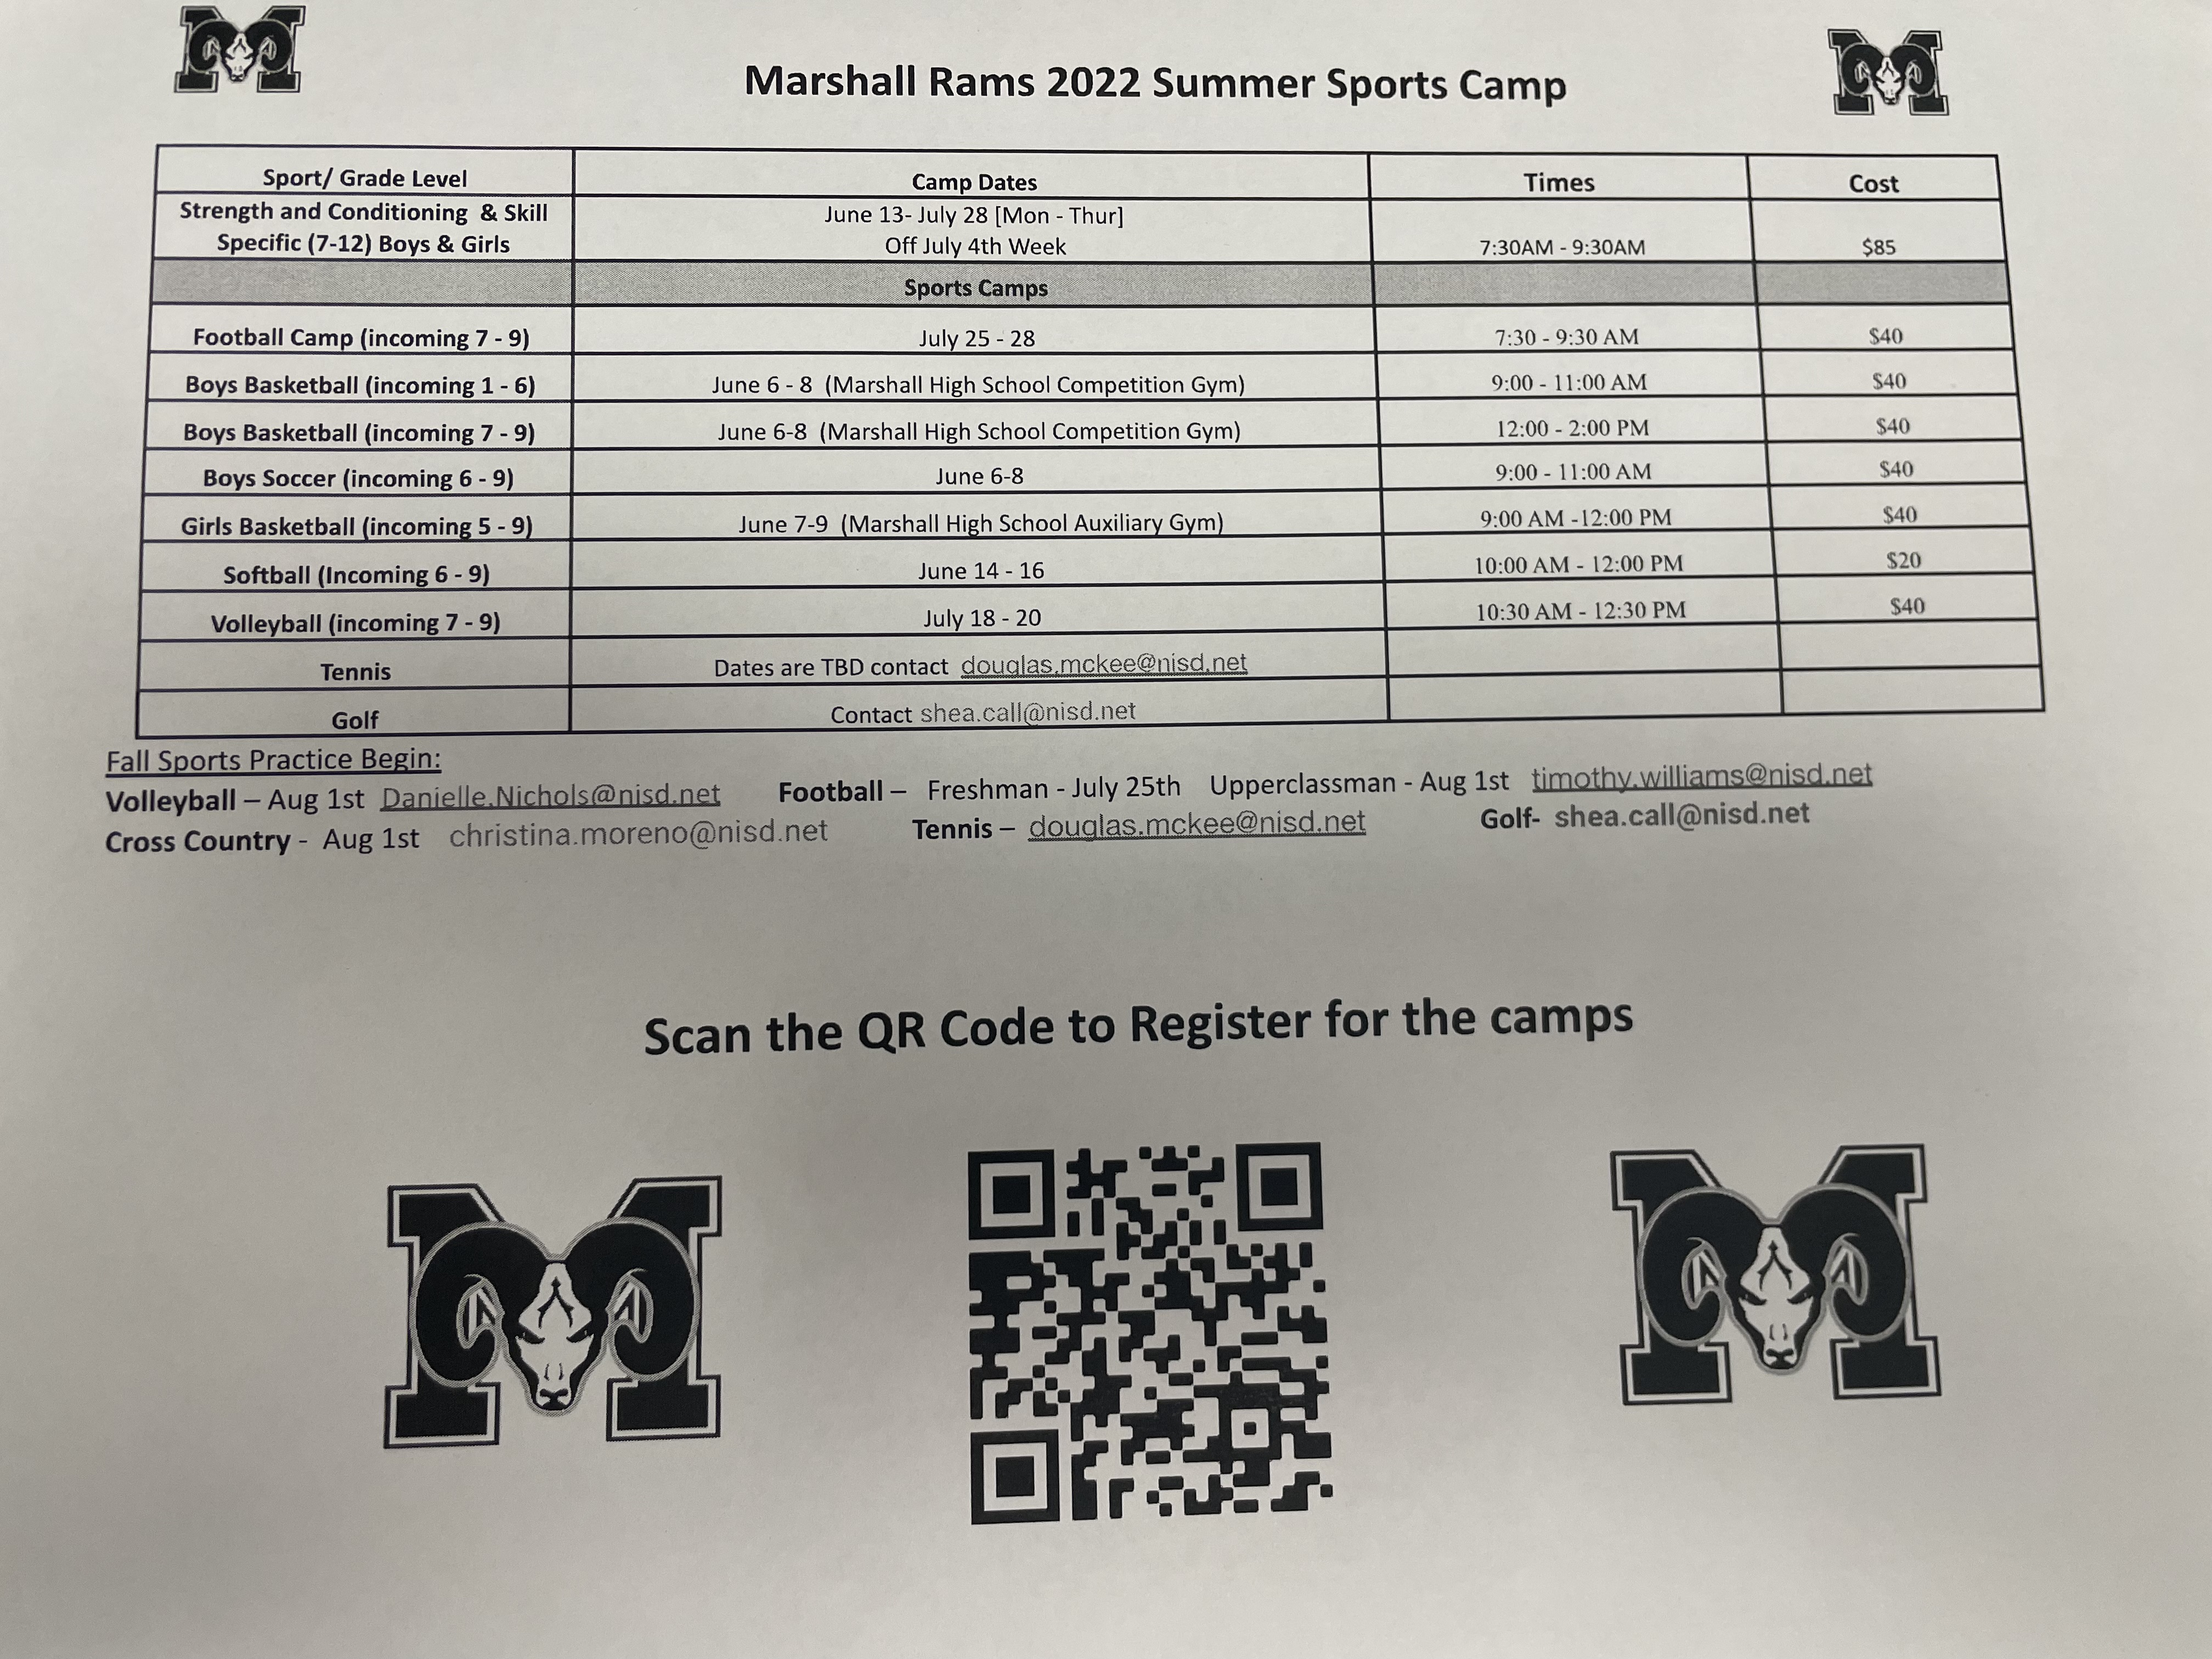 Marshall Rams 2022 Summer Sports Camp Information